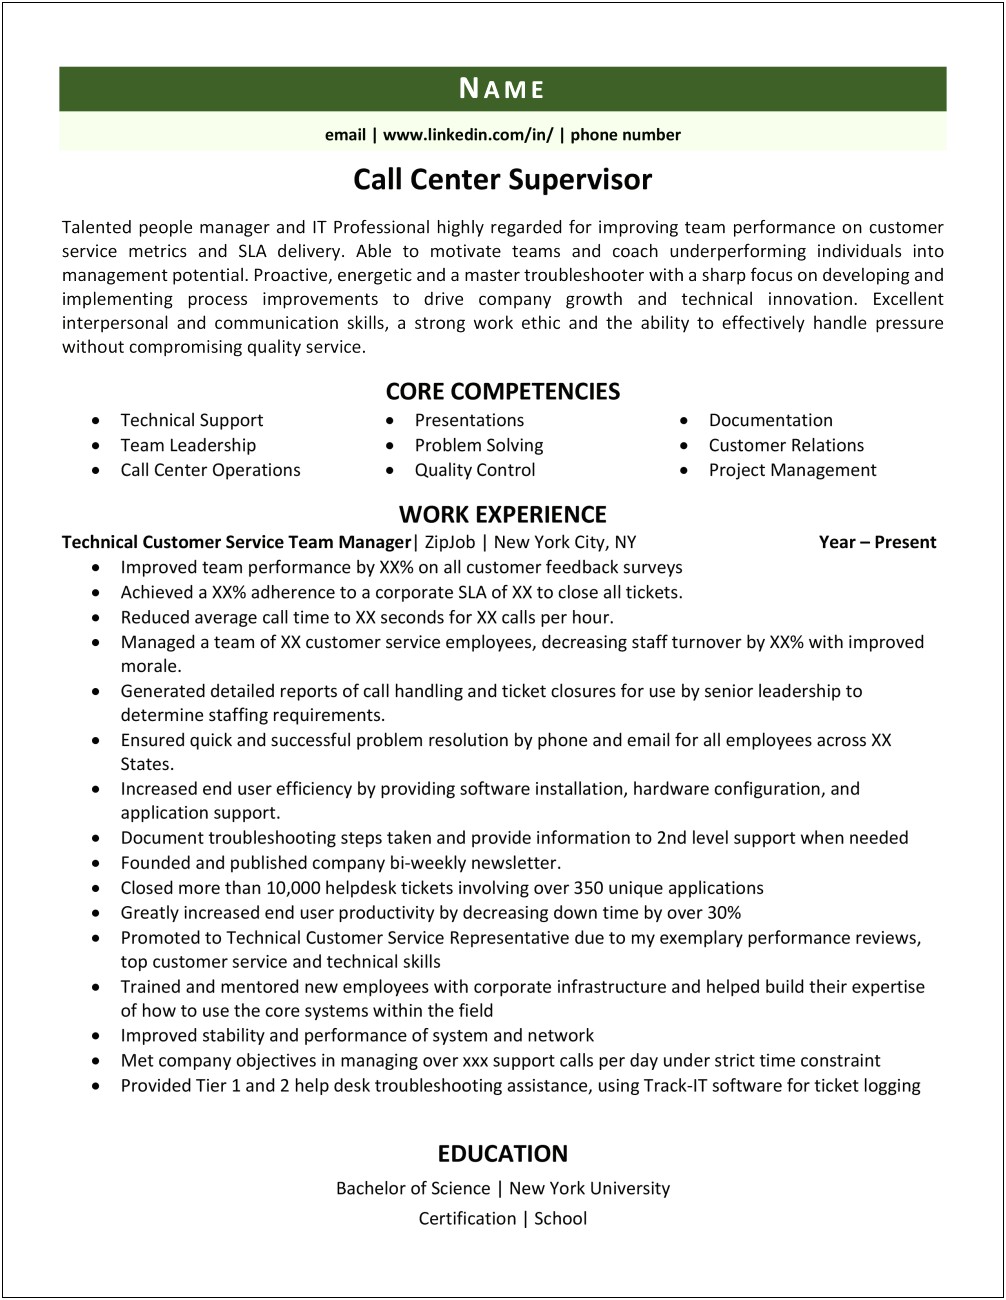 Resume Samples For Customer Service Call Center